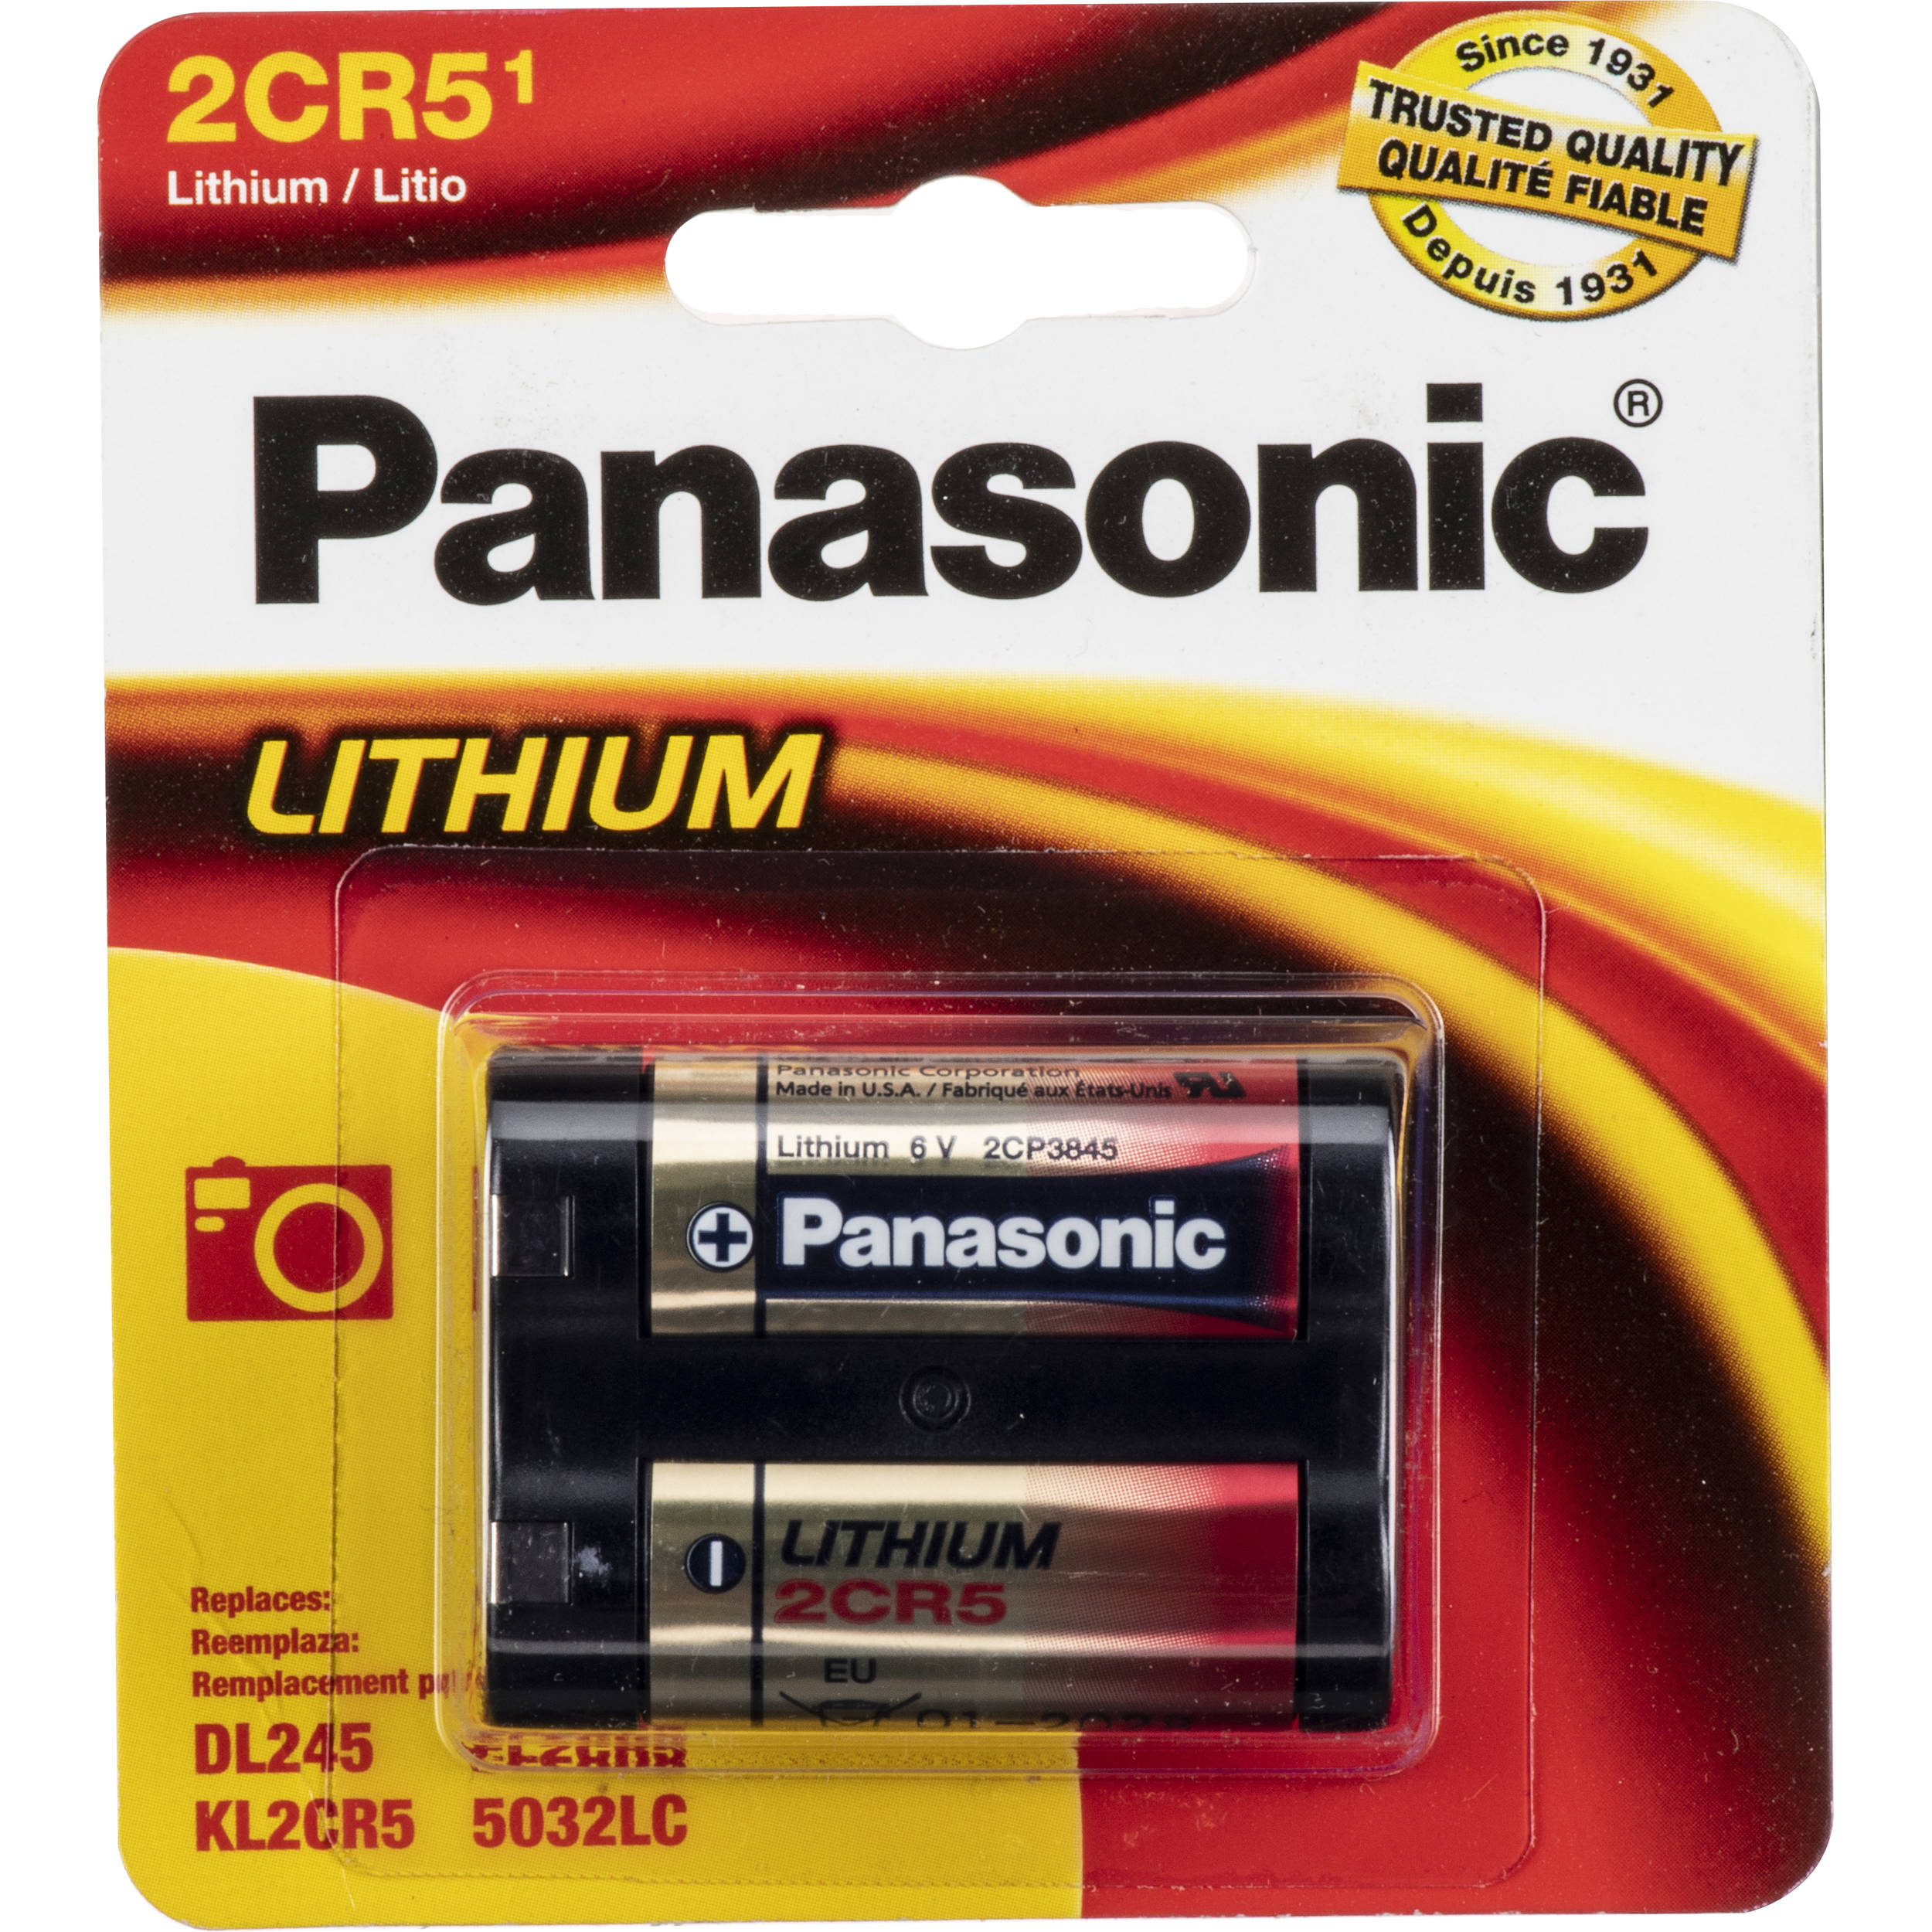 Batterie de lithium Panasonic 2CR5 (6v, 1400mAh)